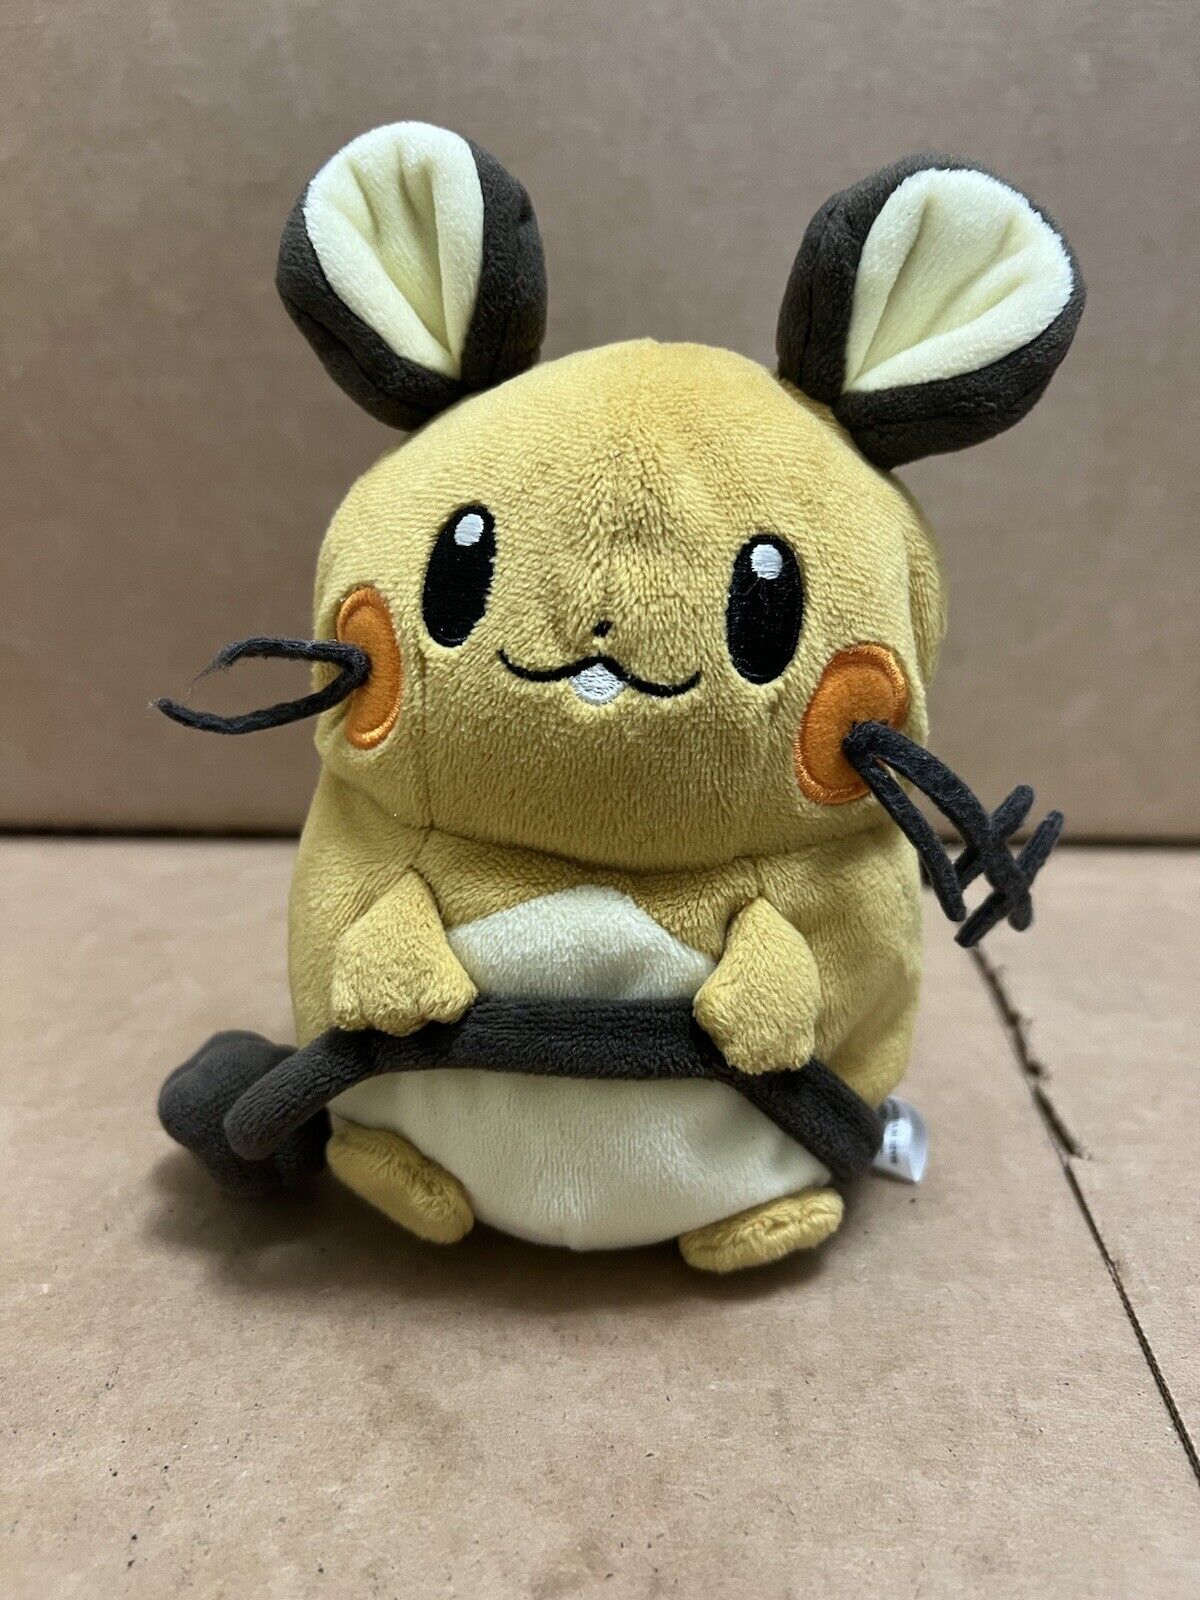 Japan Sanei Pokemon All Star Collection Pocket Monster Plush - Dedenne - Damage